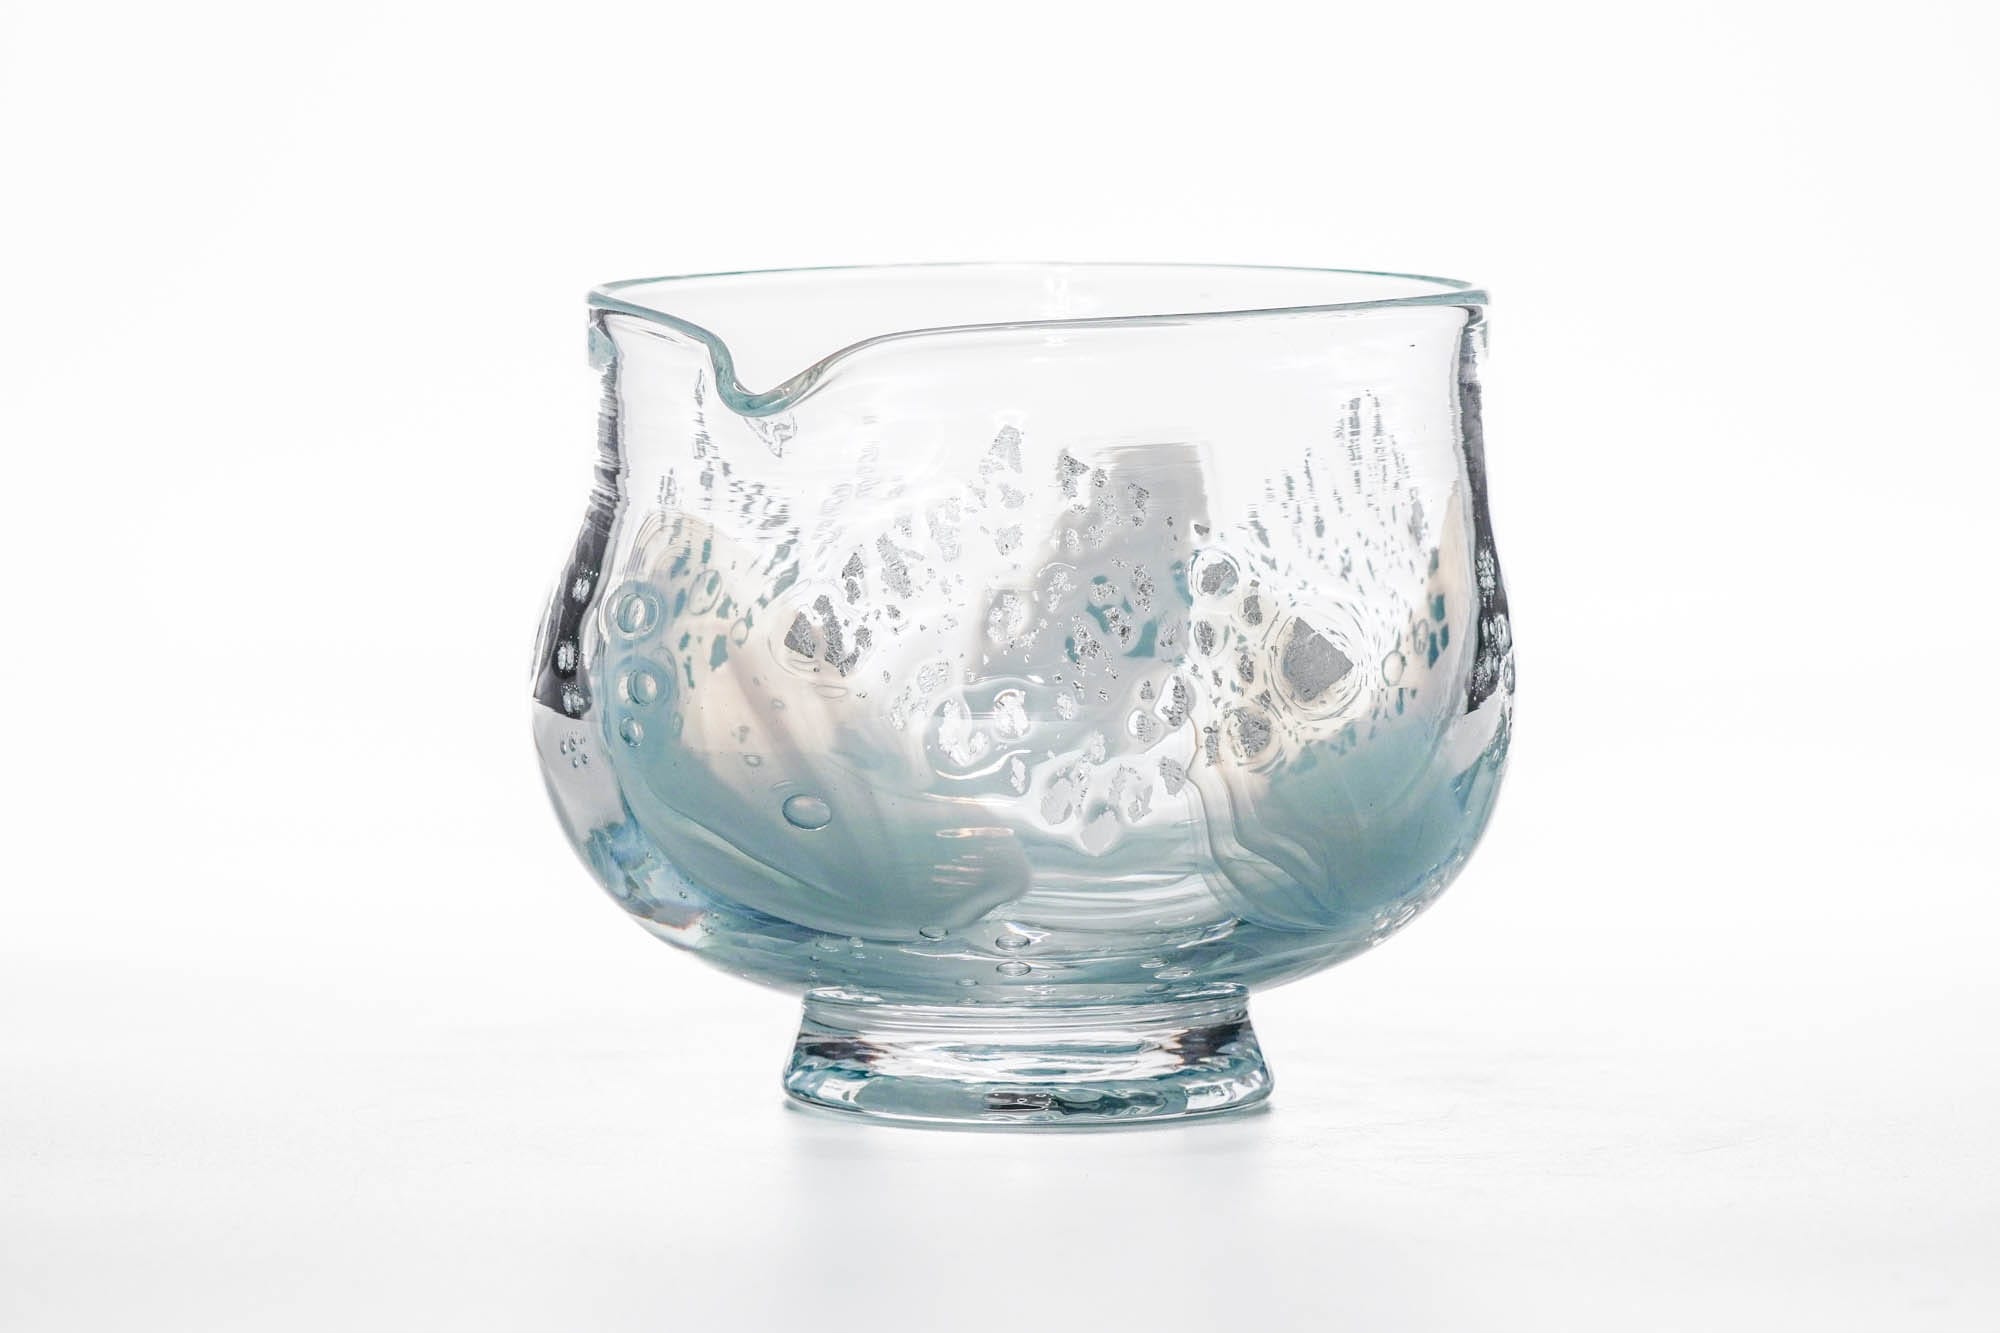 Japanese Matcha Bowl - 翠華園 Suikaen - 海 - Blue Umi Glass Pouring Chawan - 200ml